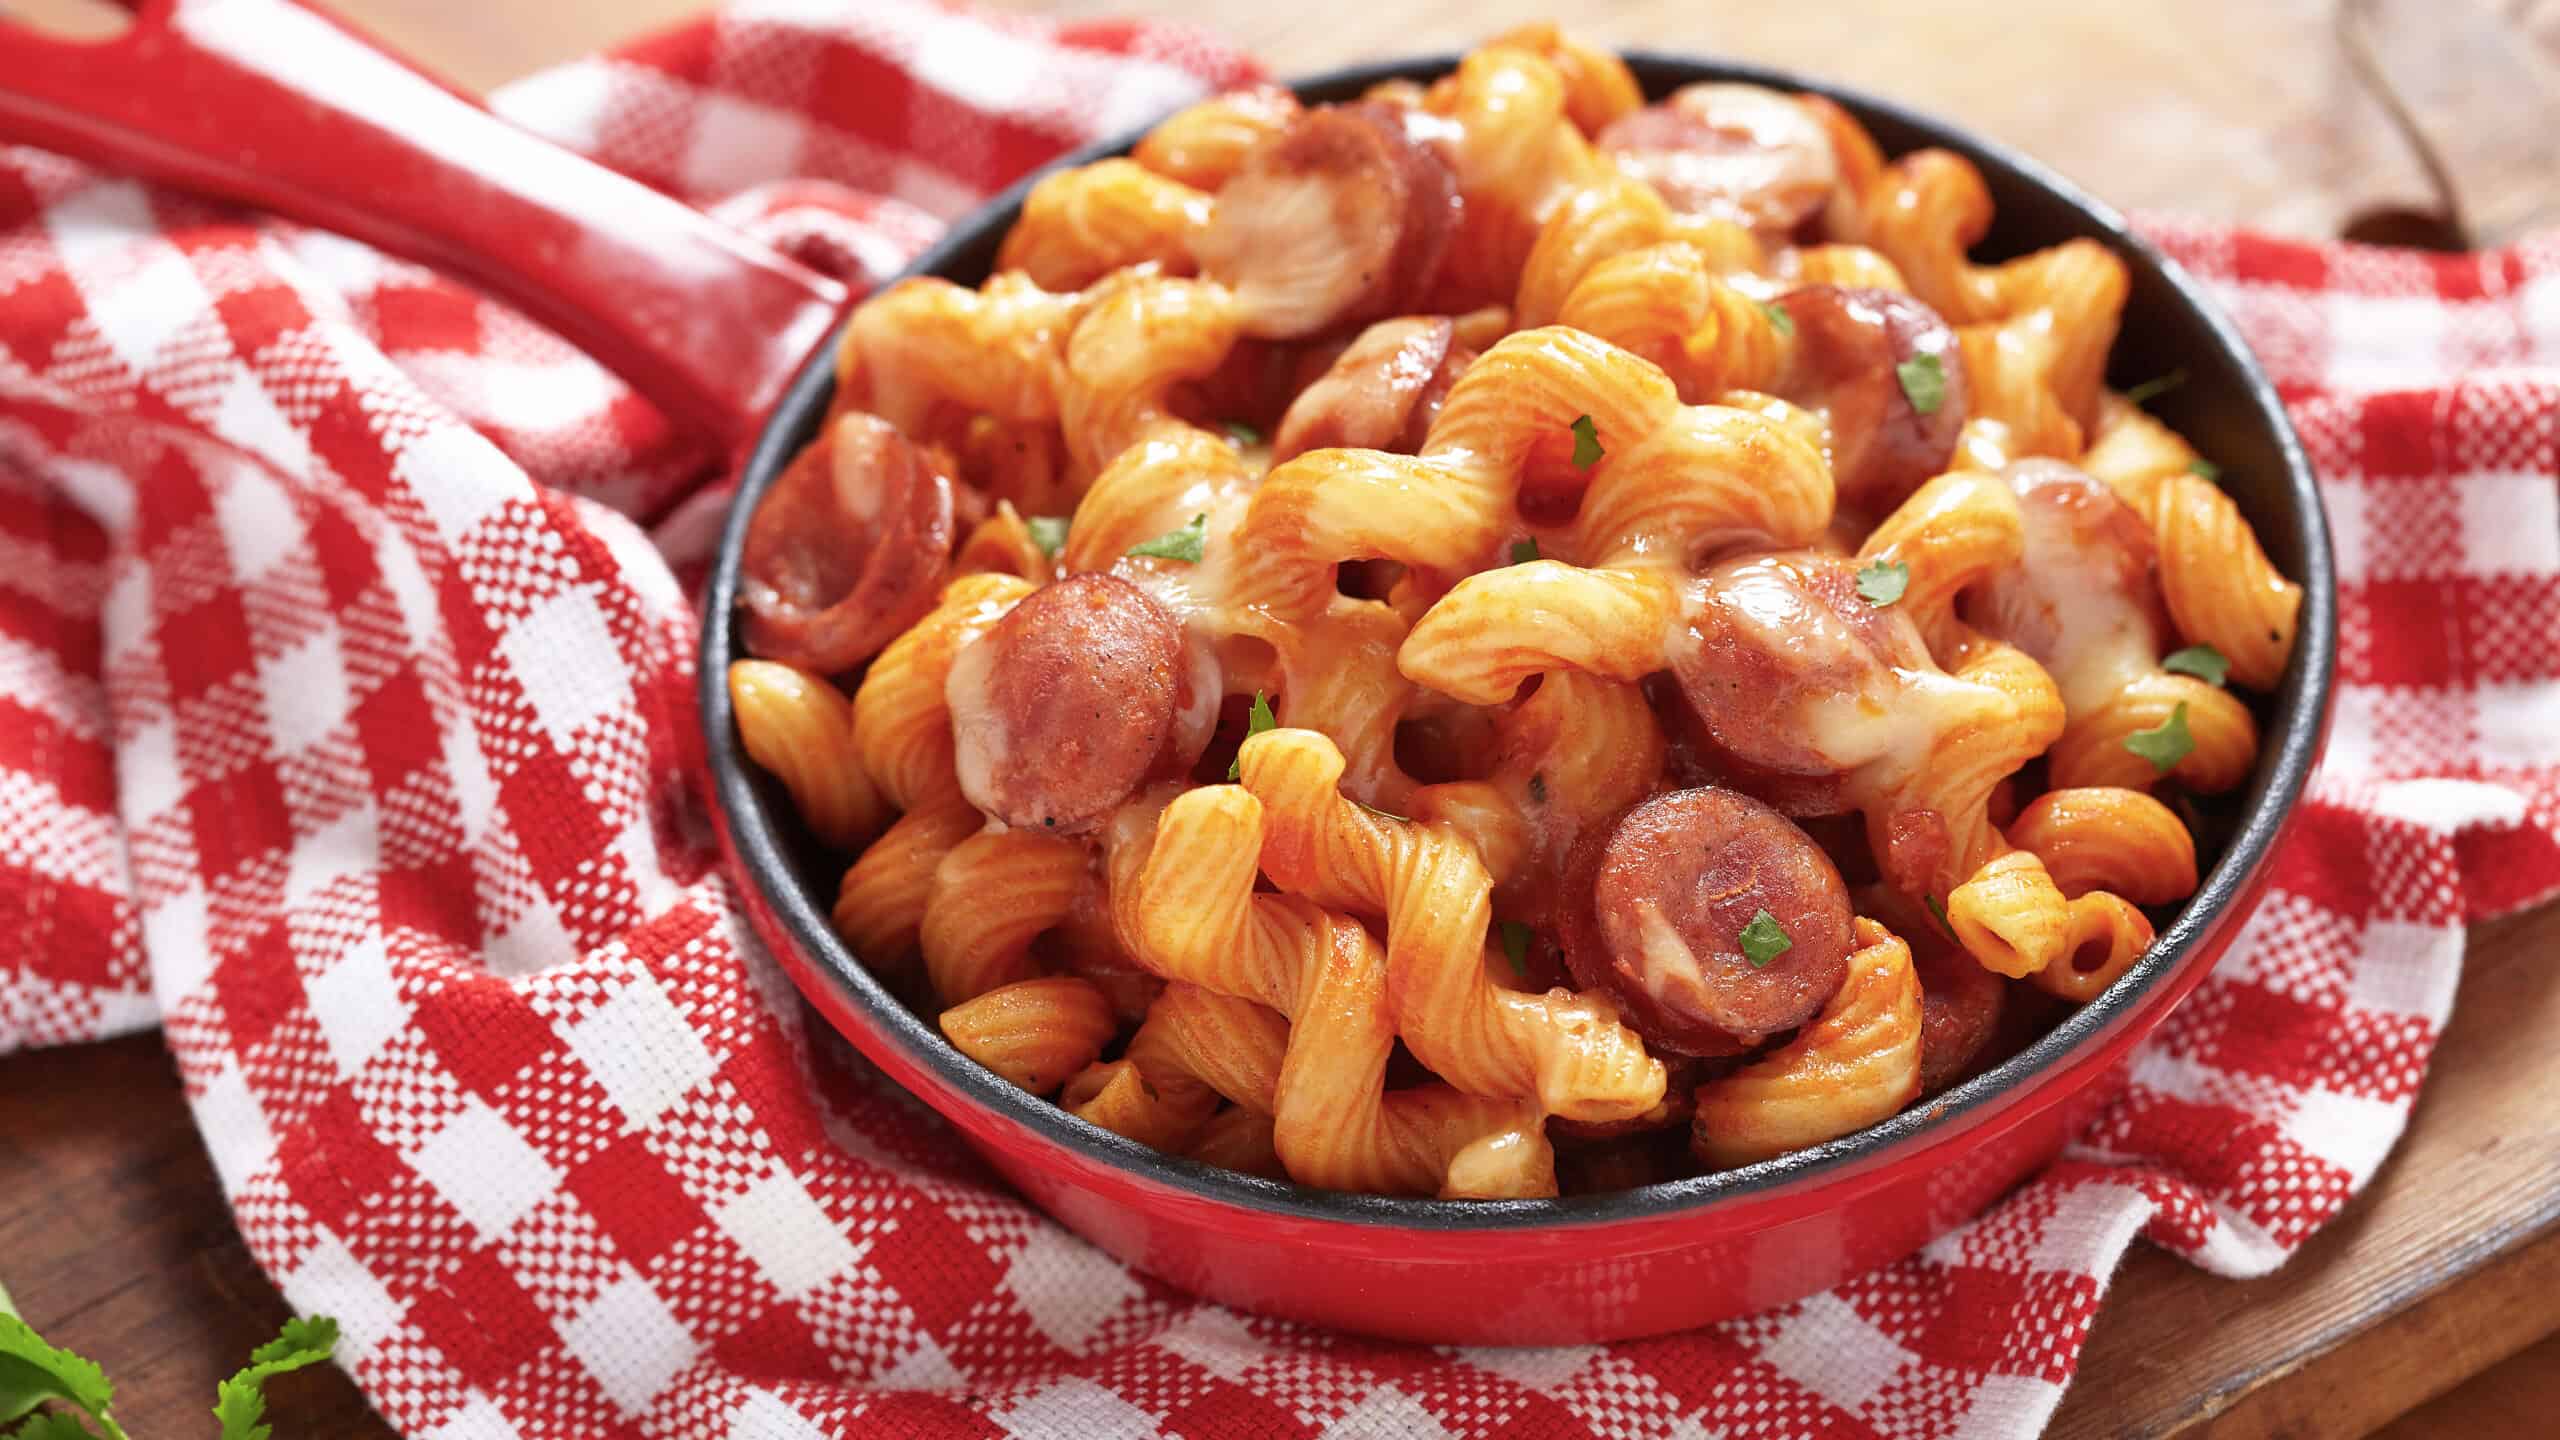 pasta with smoked sausage and cheesy tomato sauce